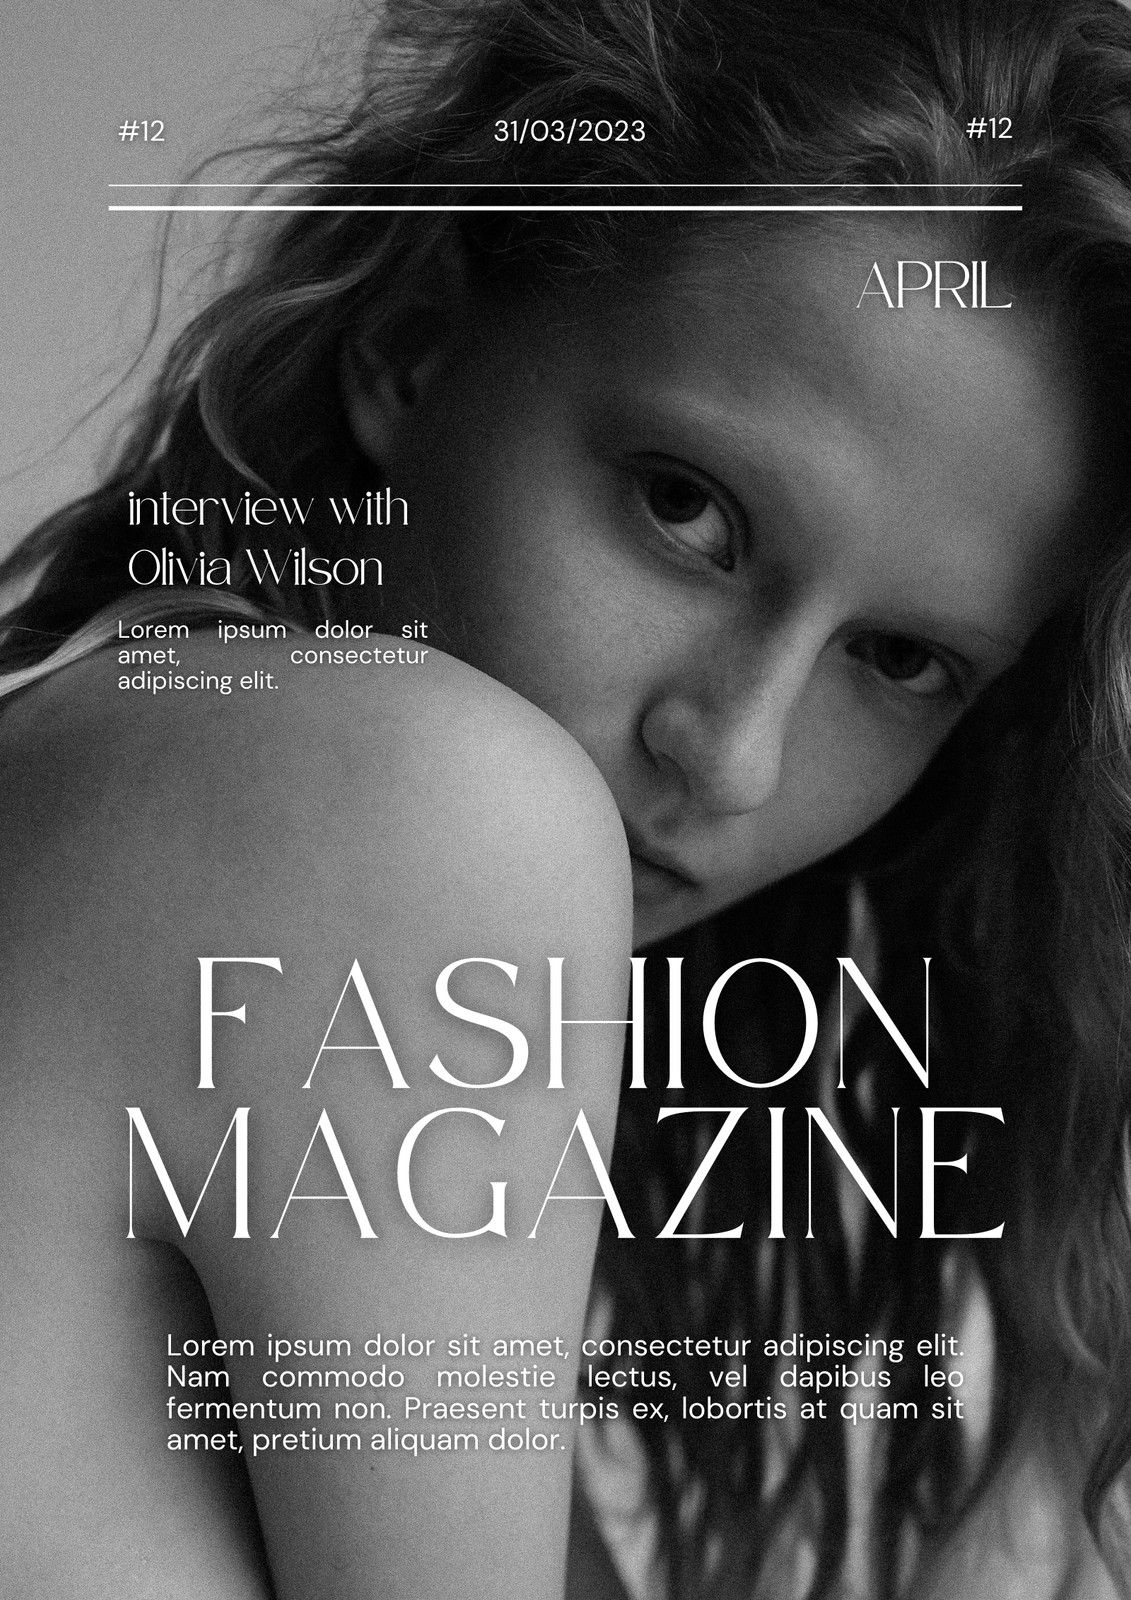 Free, printable, editable fashion magazine cover templates